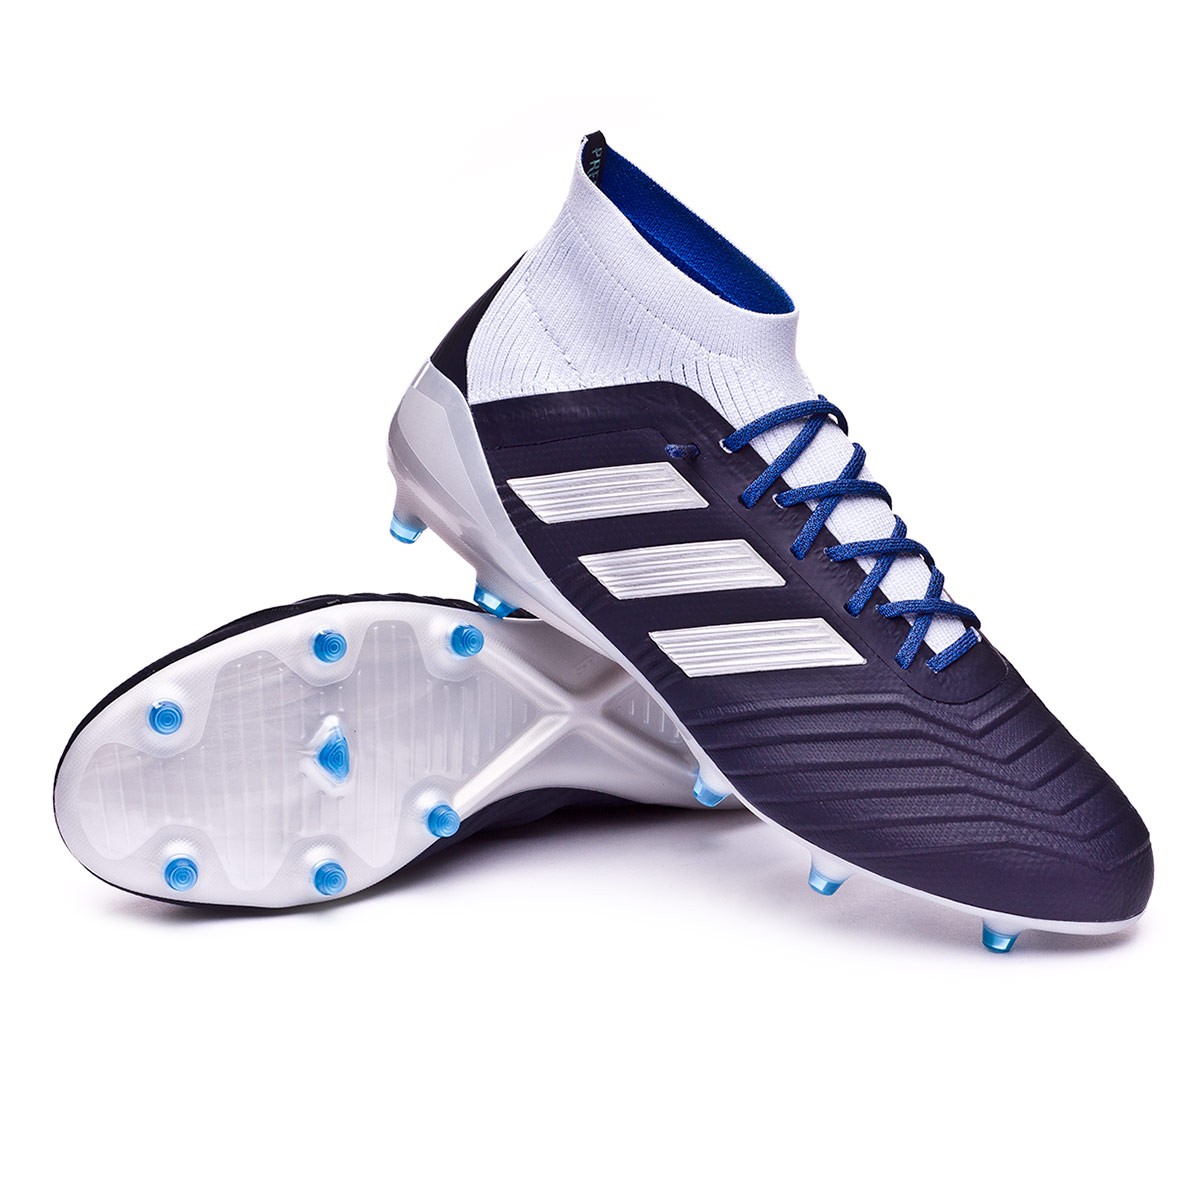 Football Boots adidas Woman Predator 18.1 FG Legend ink-Silver  metallic-Aero blue - Football store Fútbol Emotion